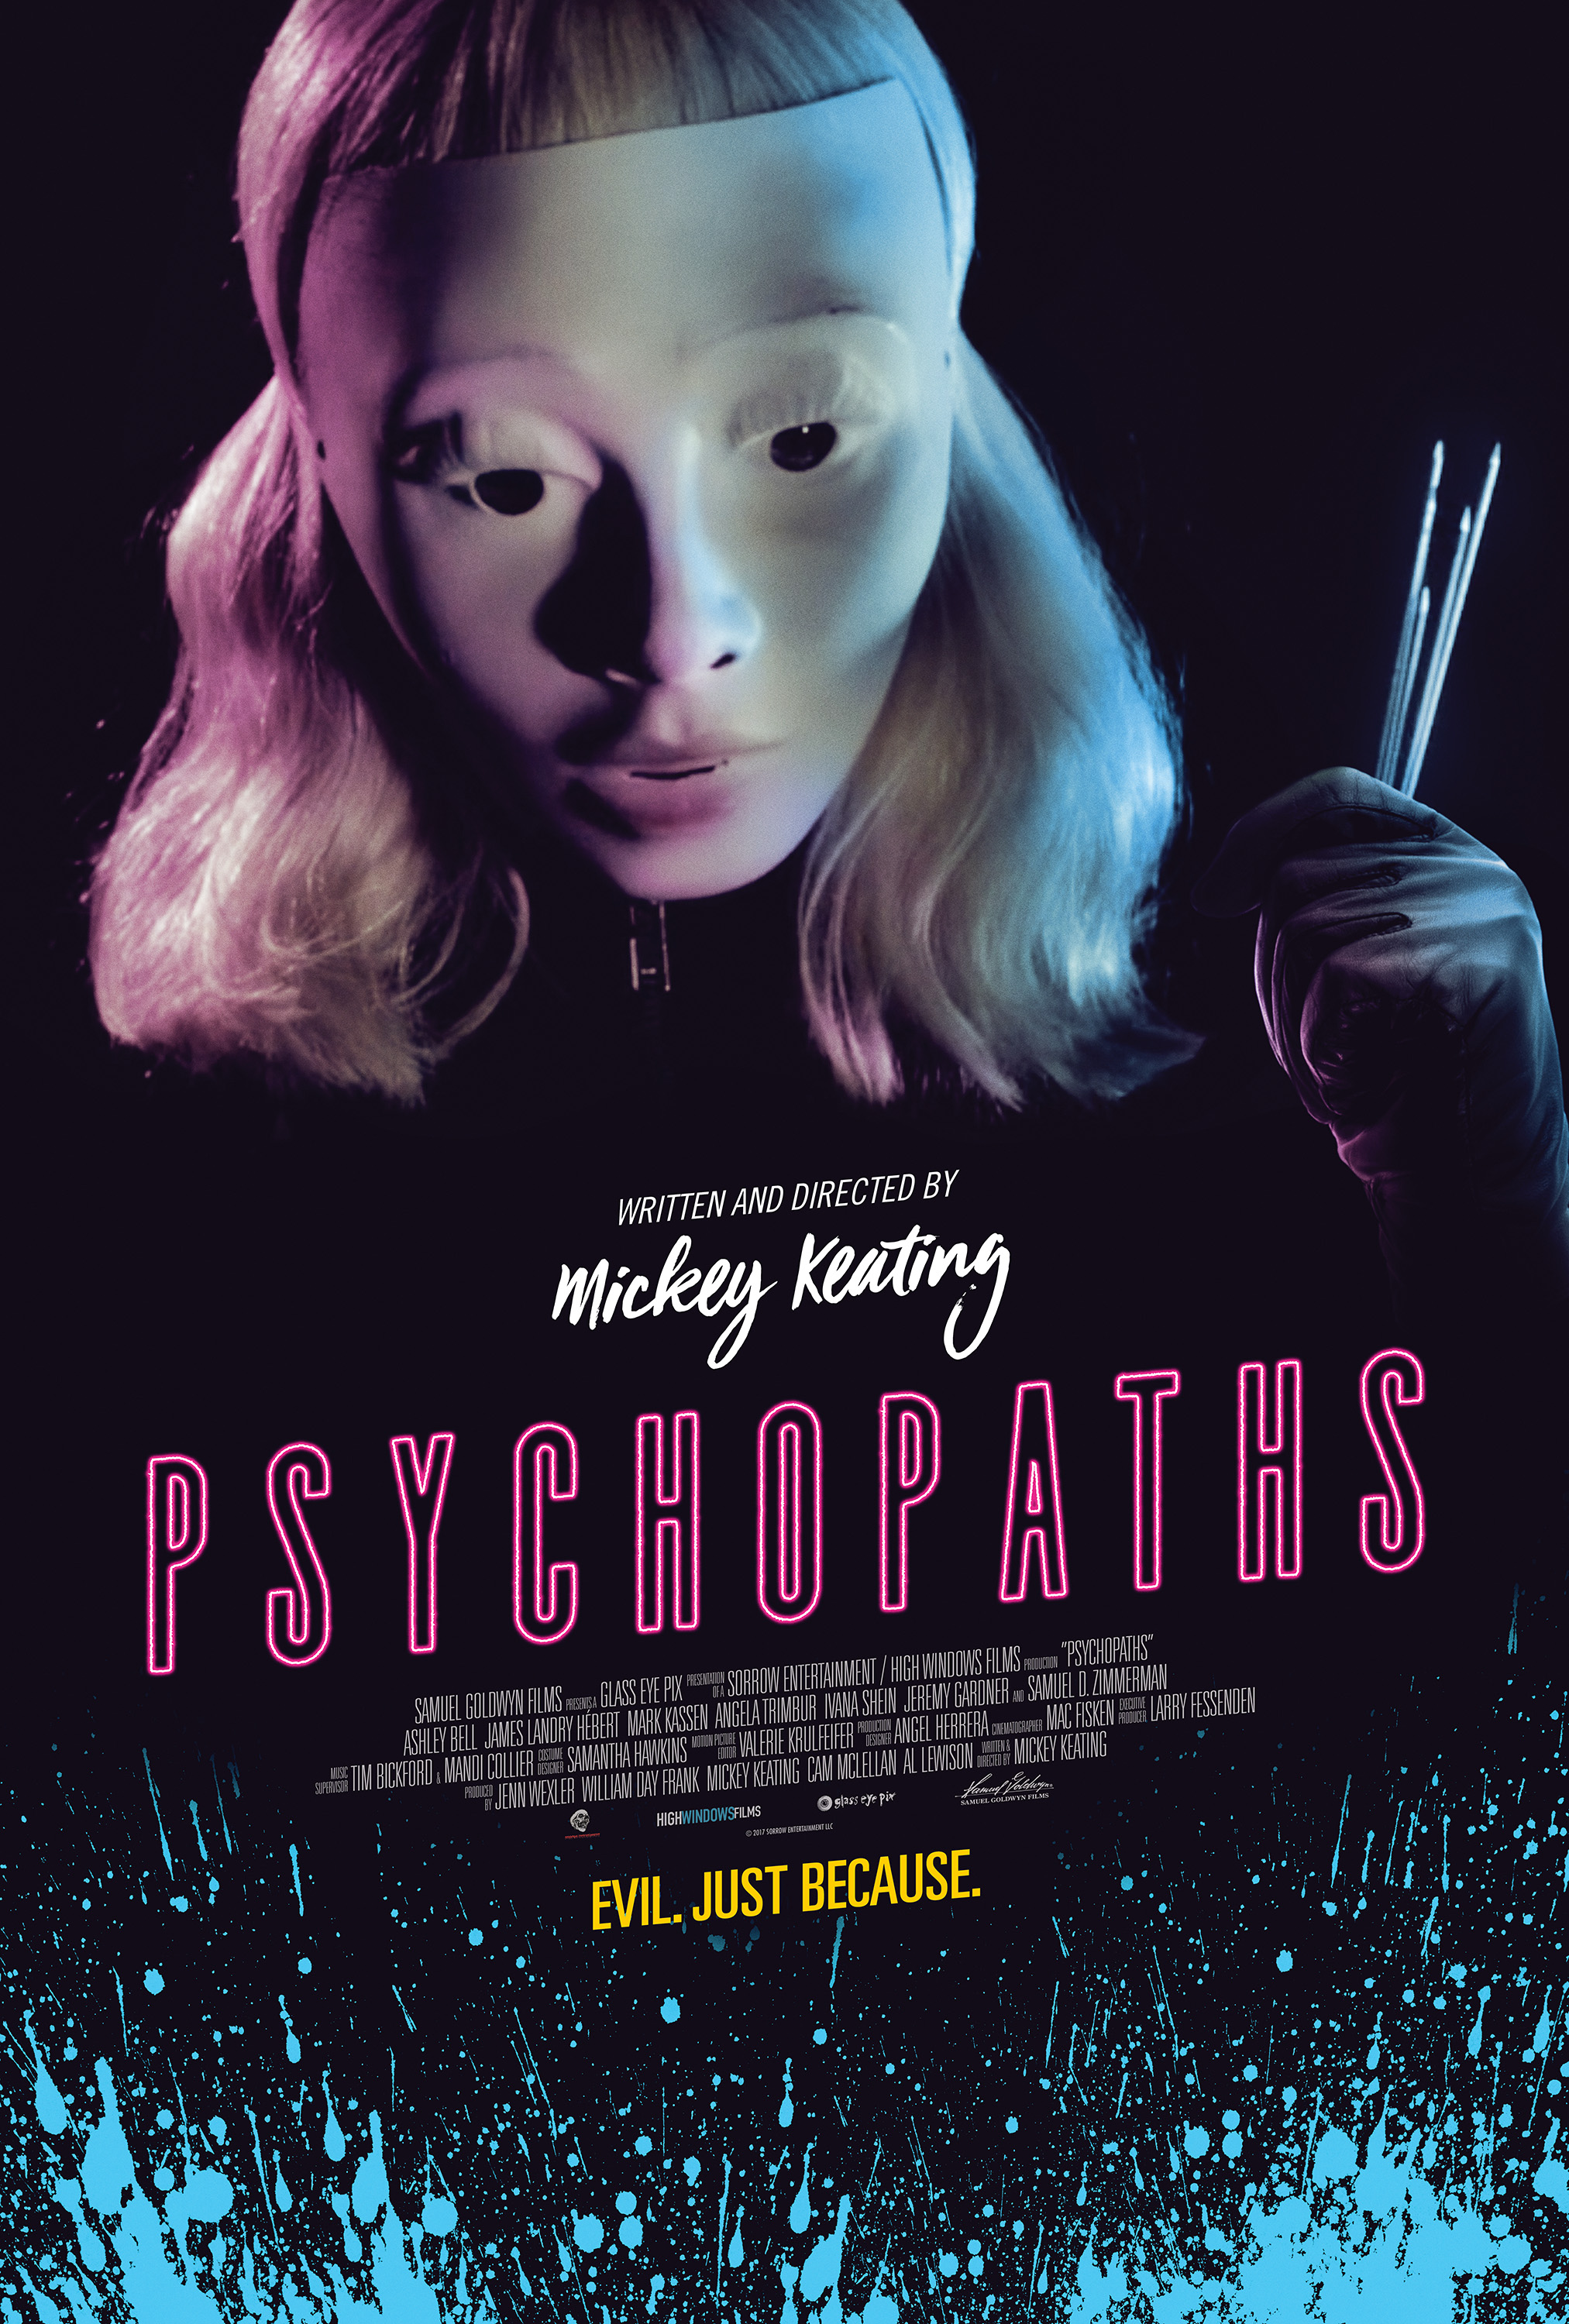 Nonton film Psychopaths layarkaca21 indoxx1 ganool online streaming terbaru